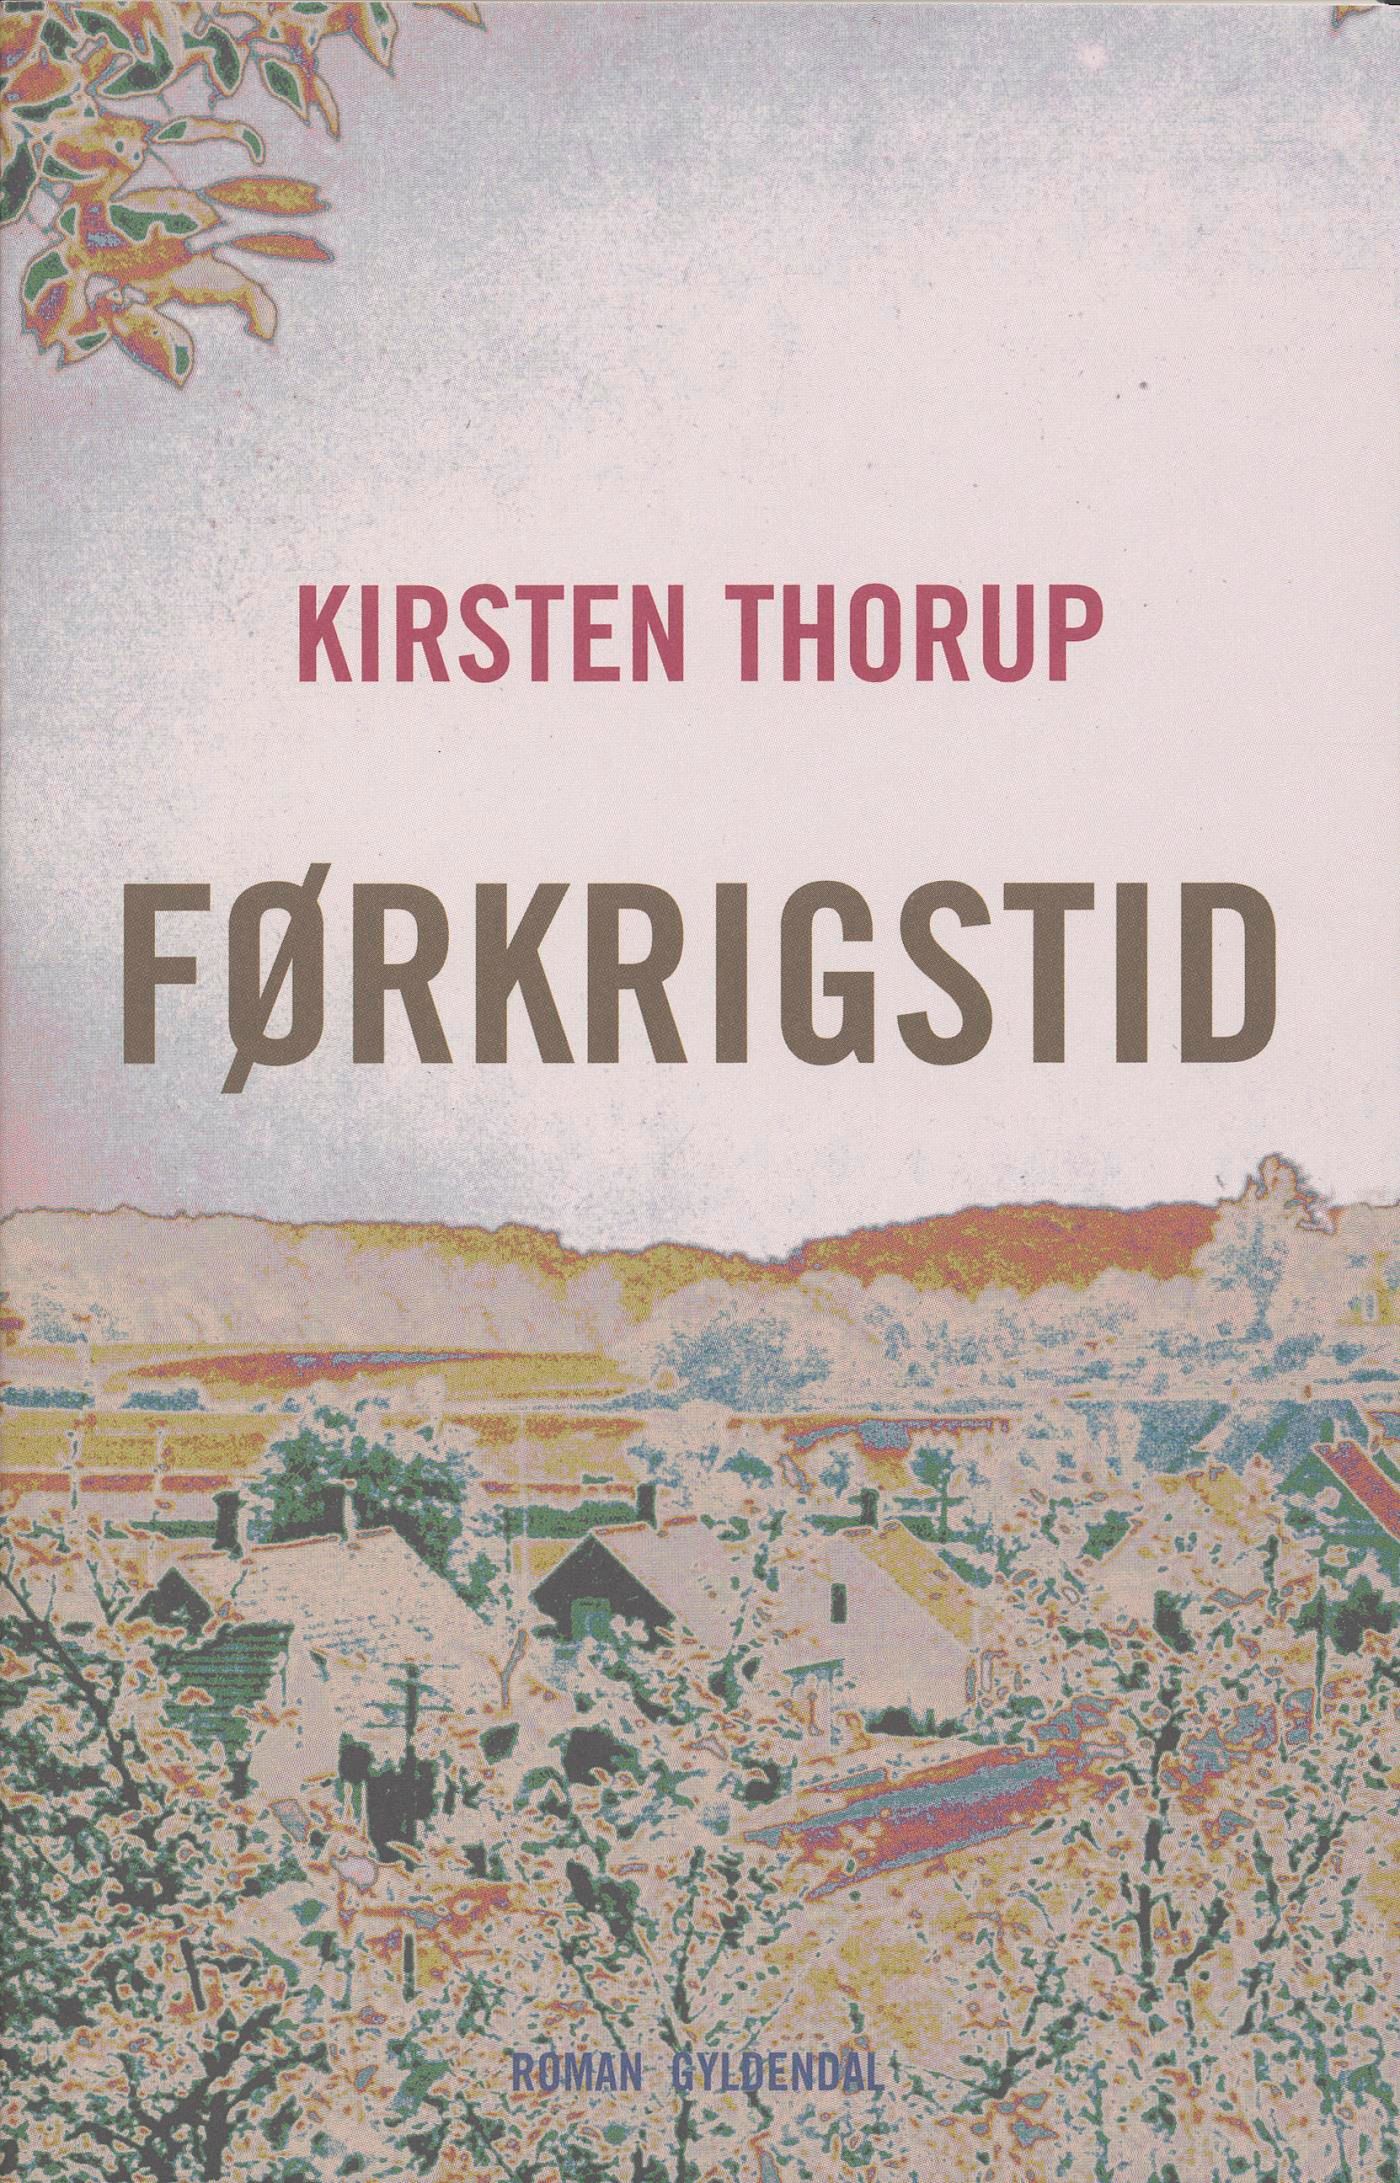 Førkrigstid, eBook by Kirsten Thorup